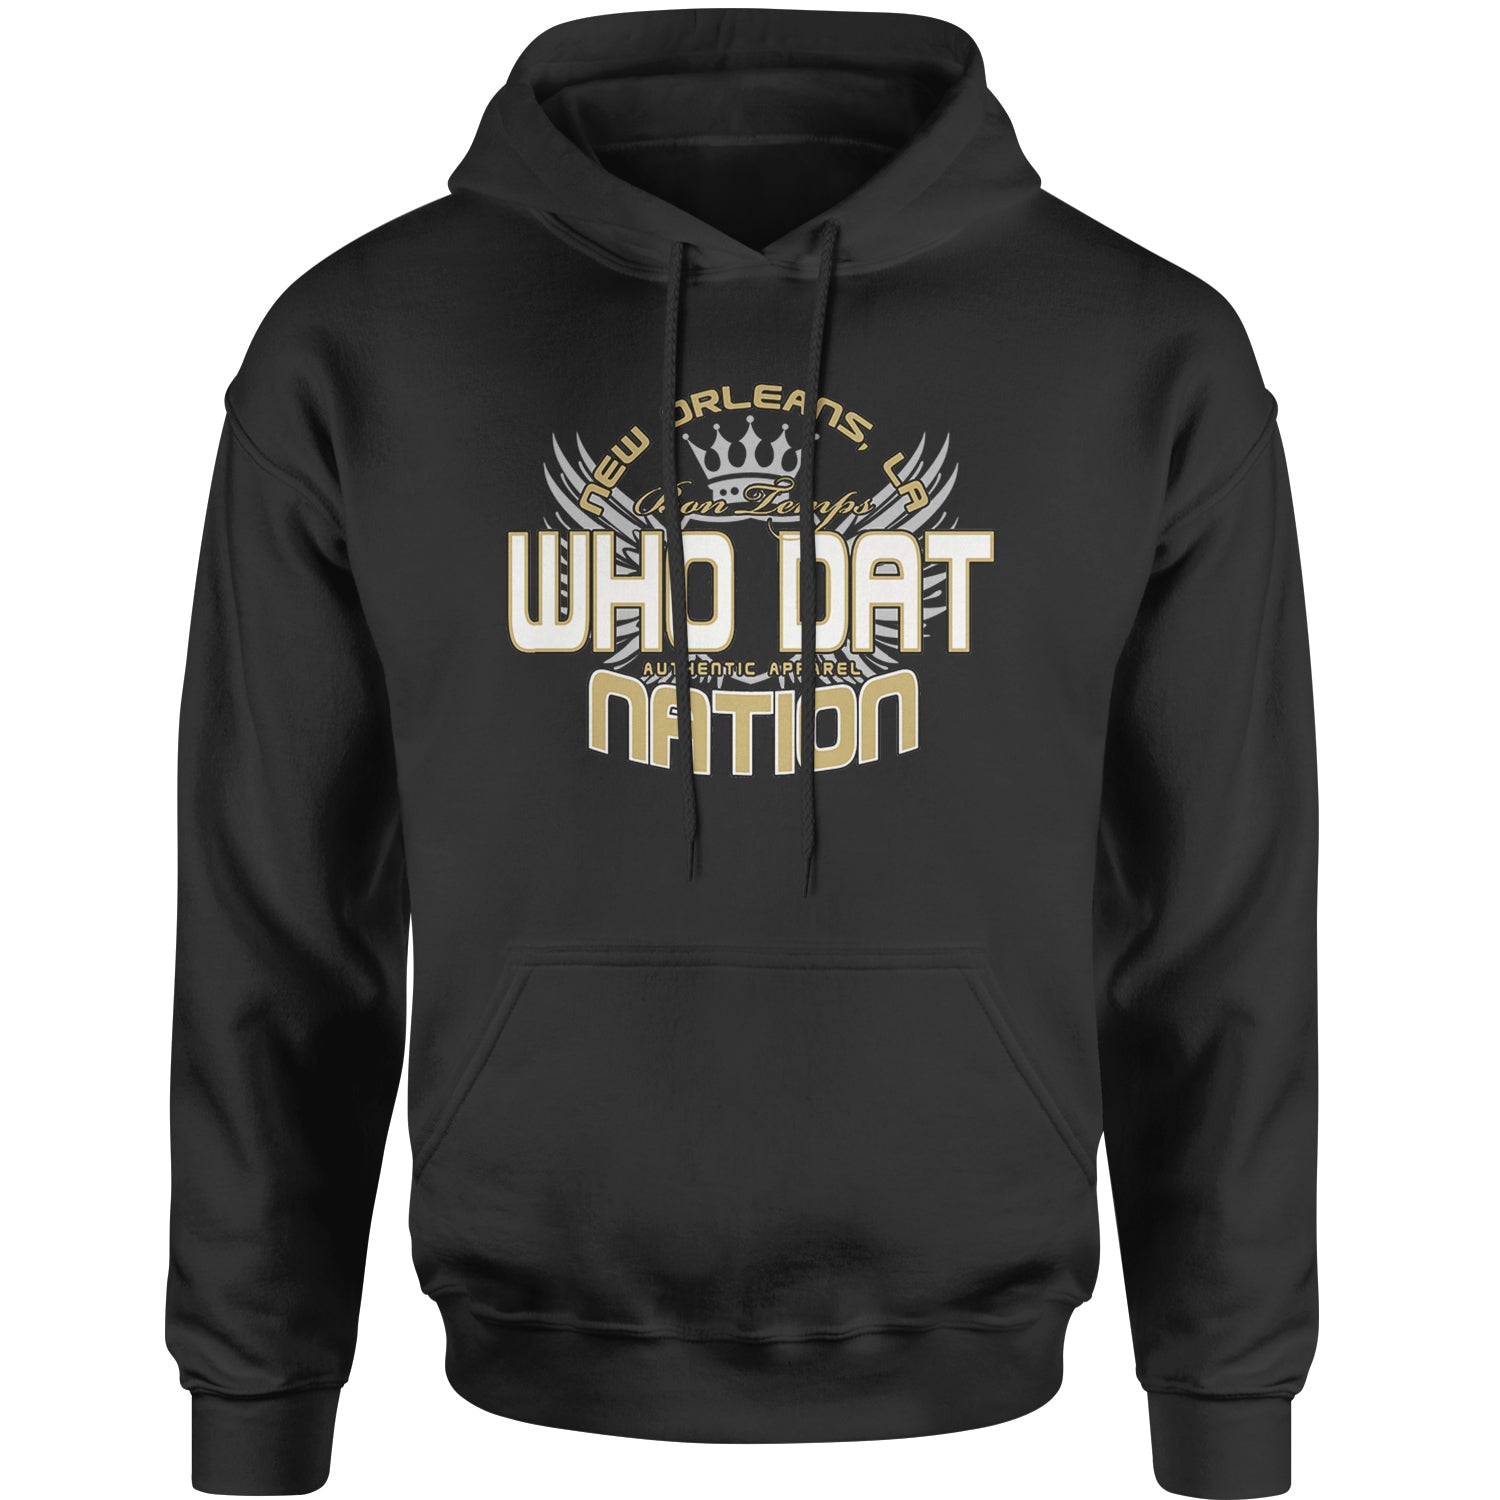 Who Dat Nation New Orleans (Color) Adult Hoodie Sweatshirt